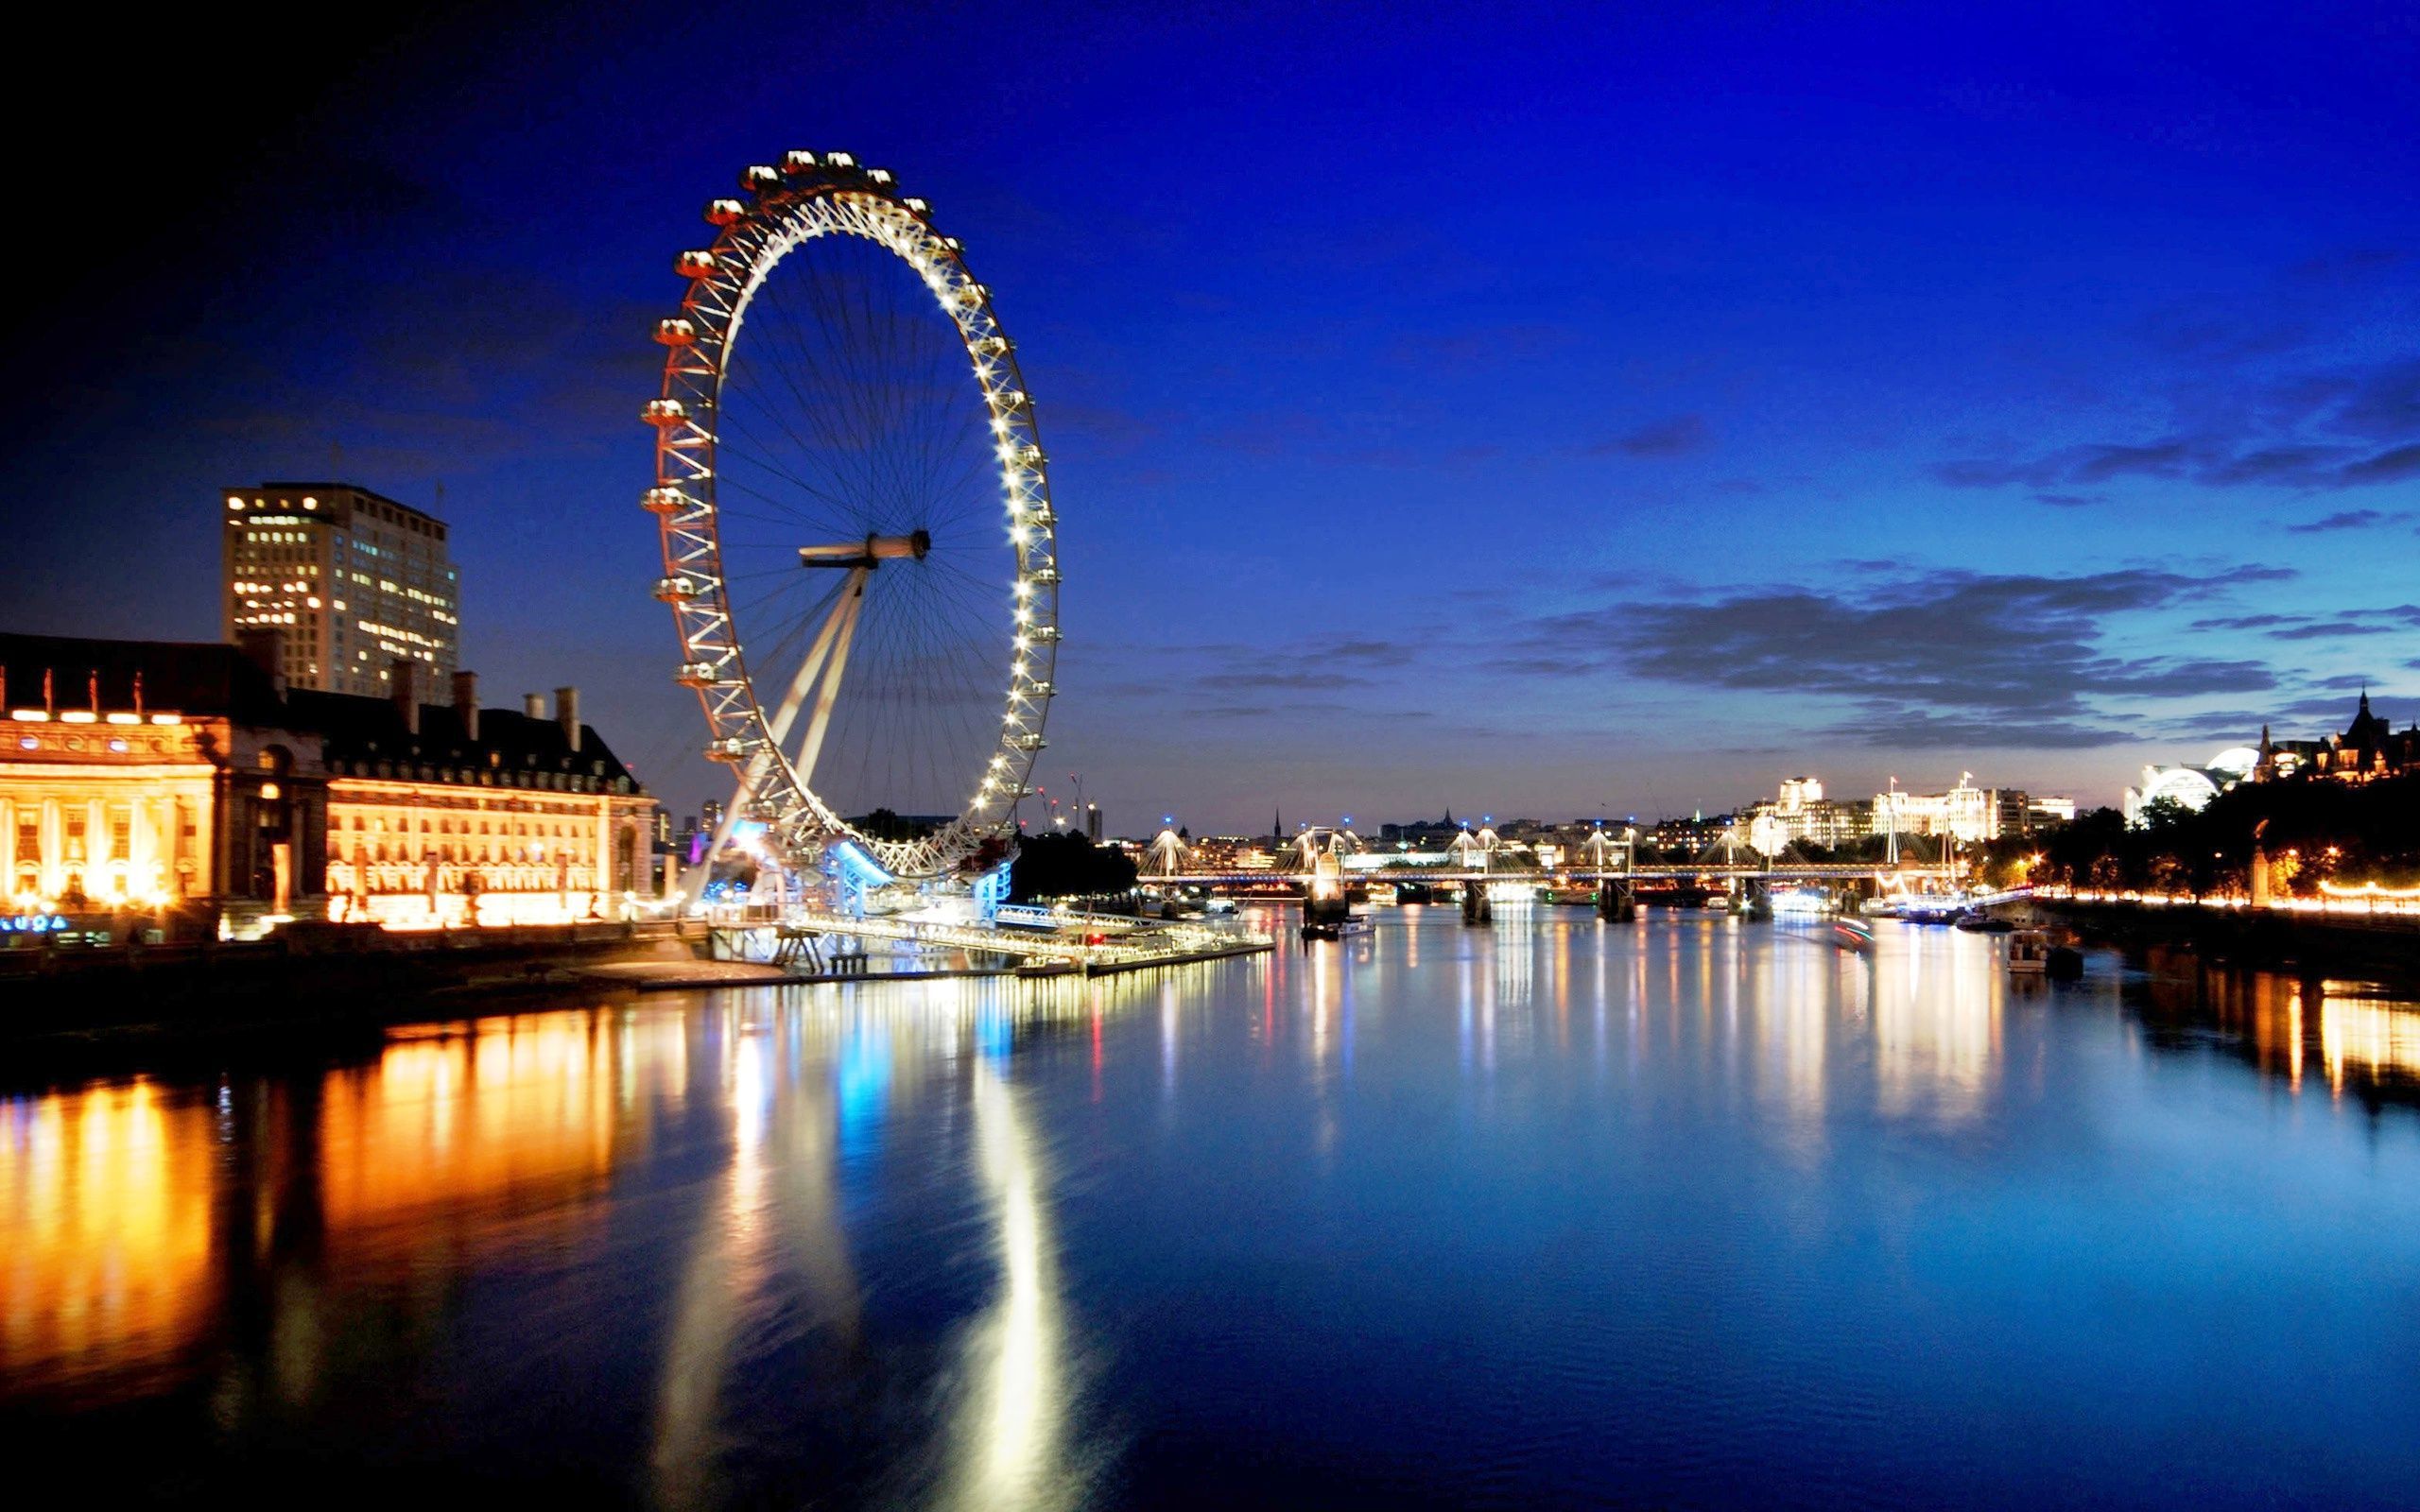 London Eye at Night Wallpaper by HD Wallpaper Daily. Most